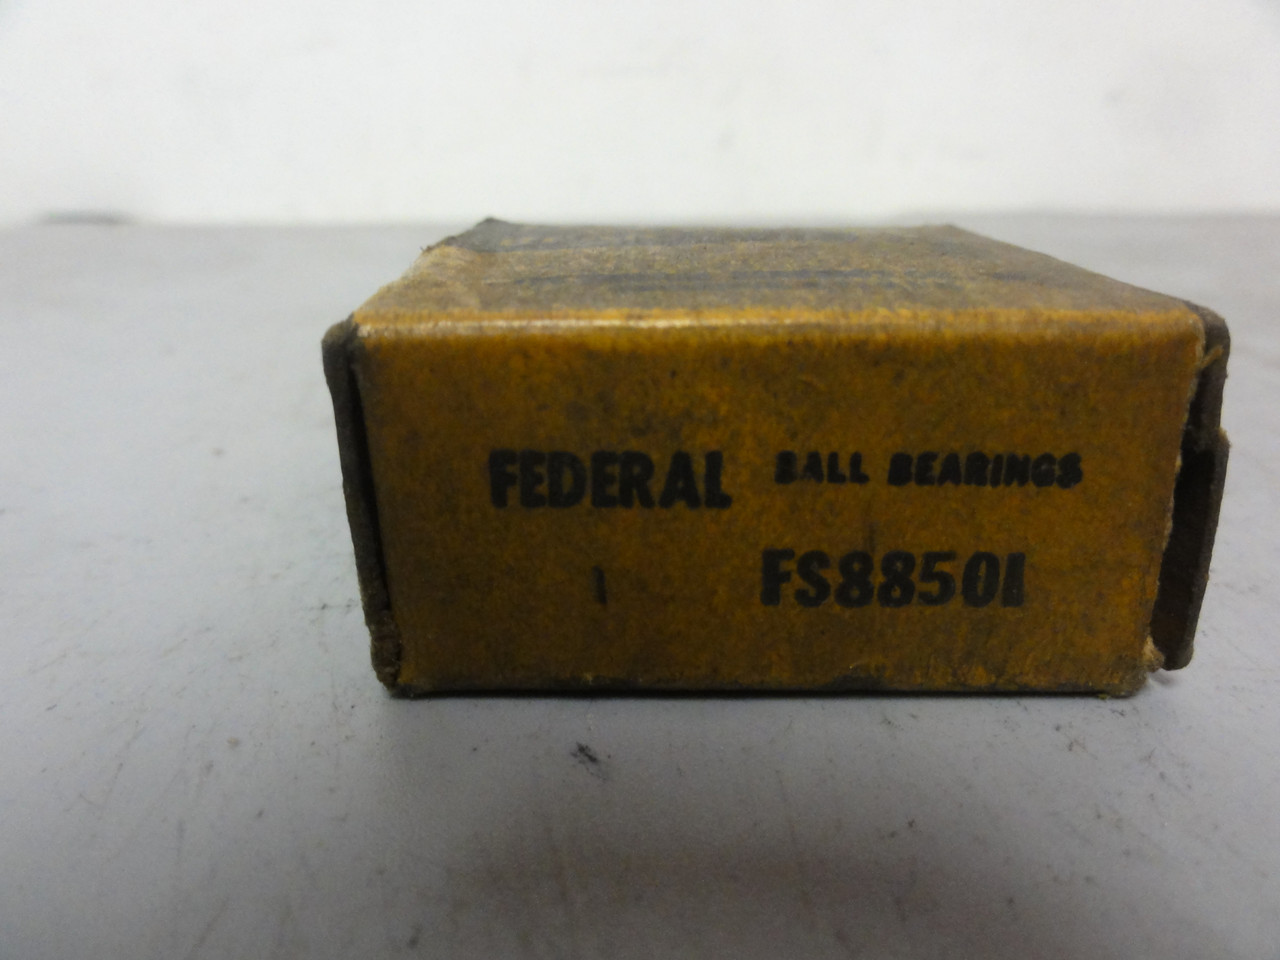 Federal FS88501 Ball Bearing- New (Open Box)